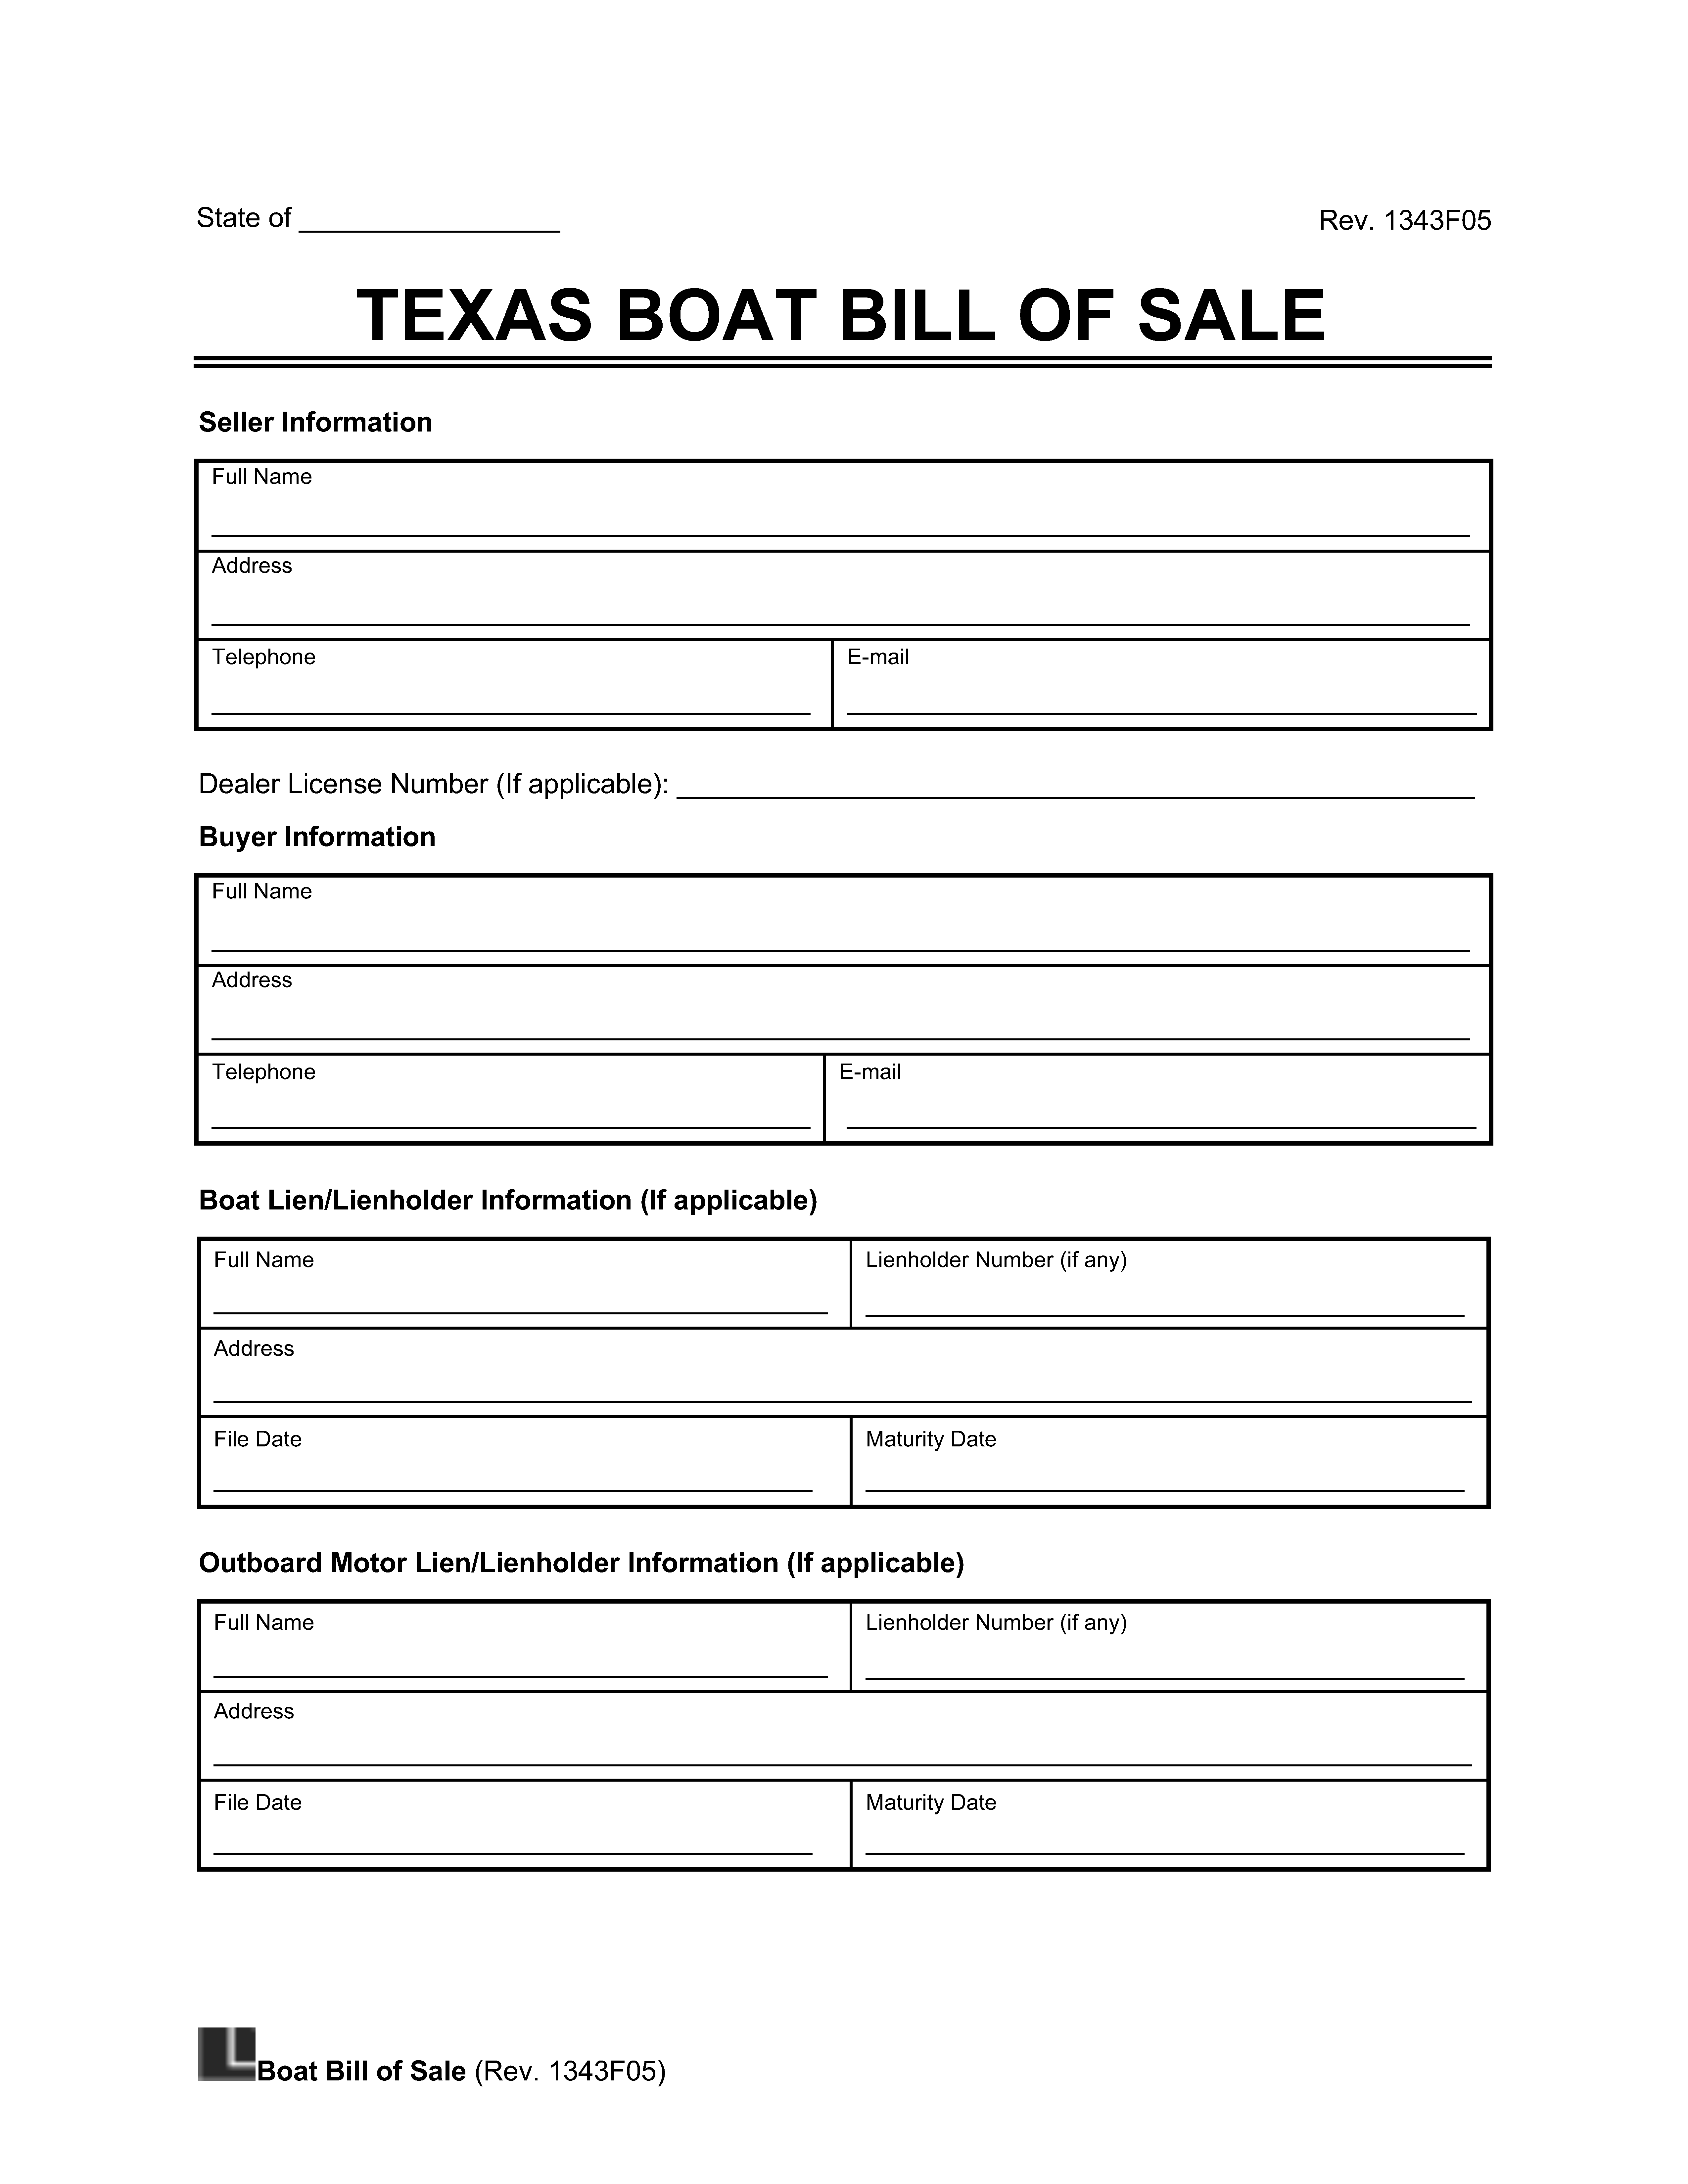 Texas Boat Bill of Sale screenshot